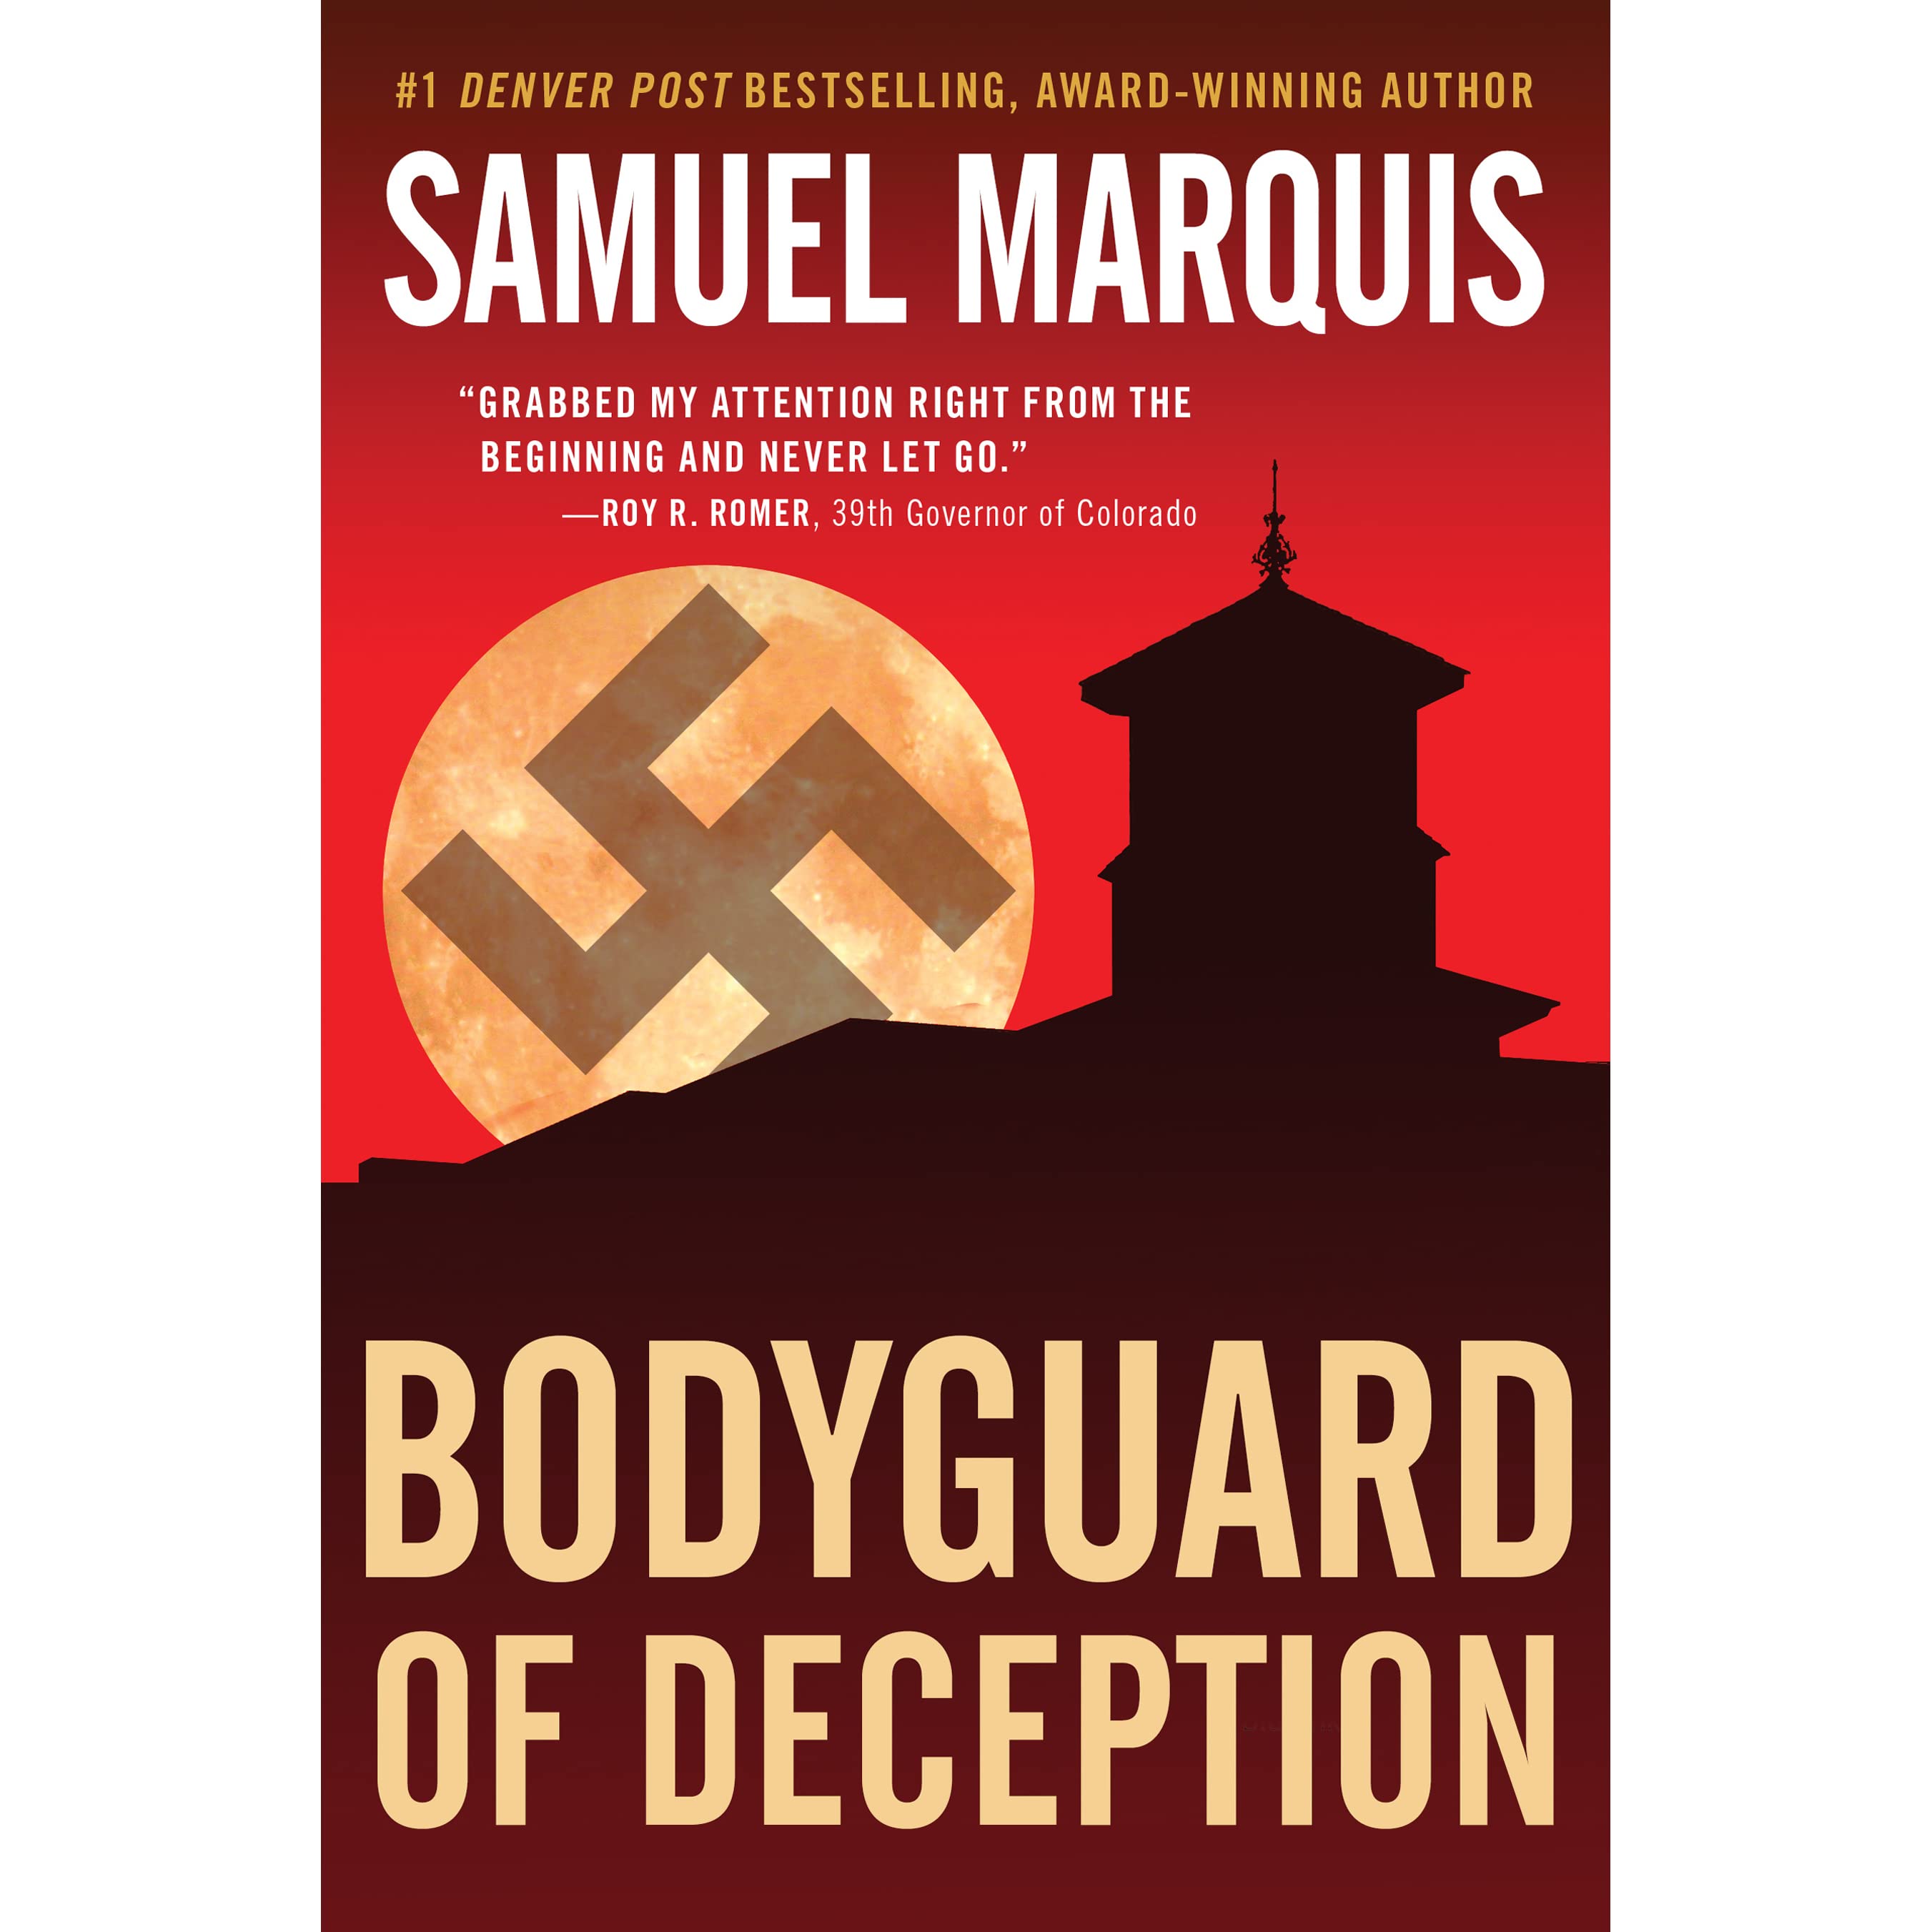 Bodyguard of Deception: A Novel of Suspense